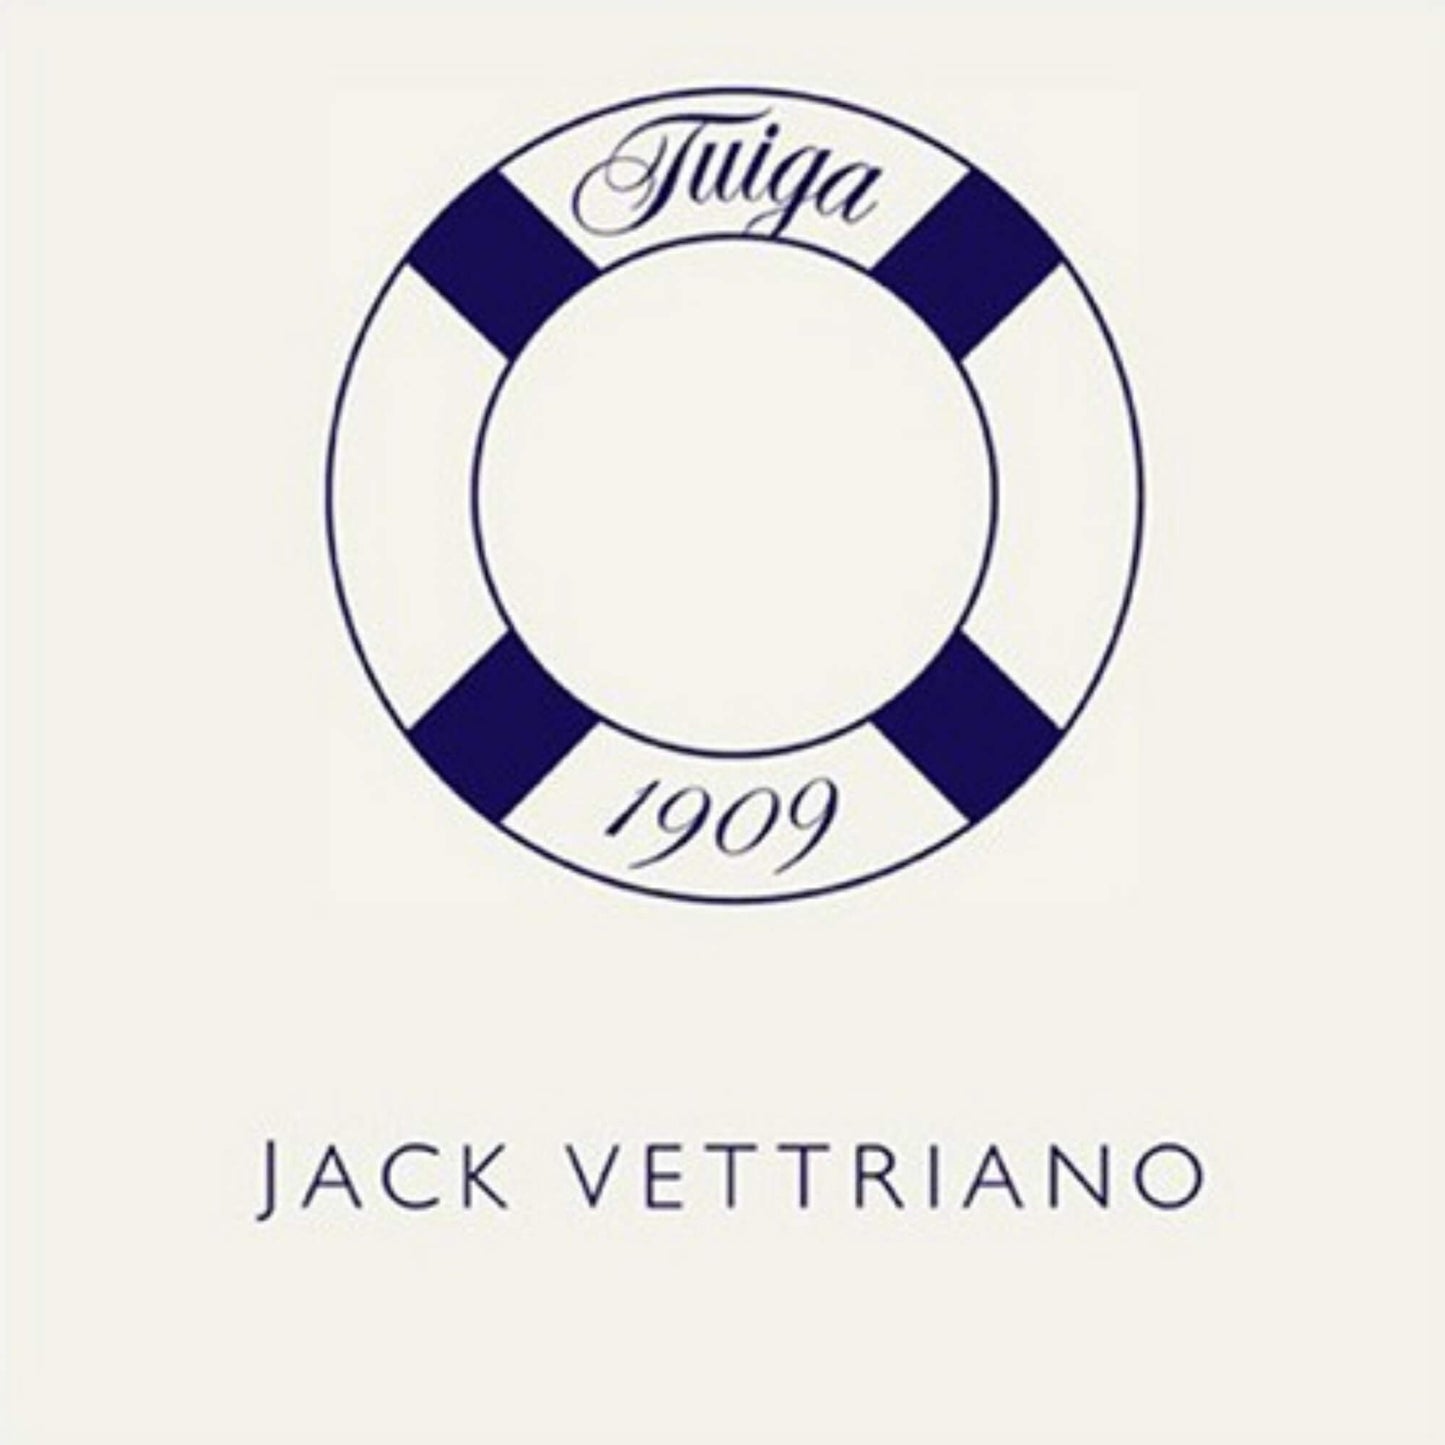 Homage a Tuiga 1909 Exhibition Catalogue Jack Vettriano